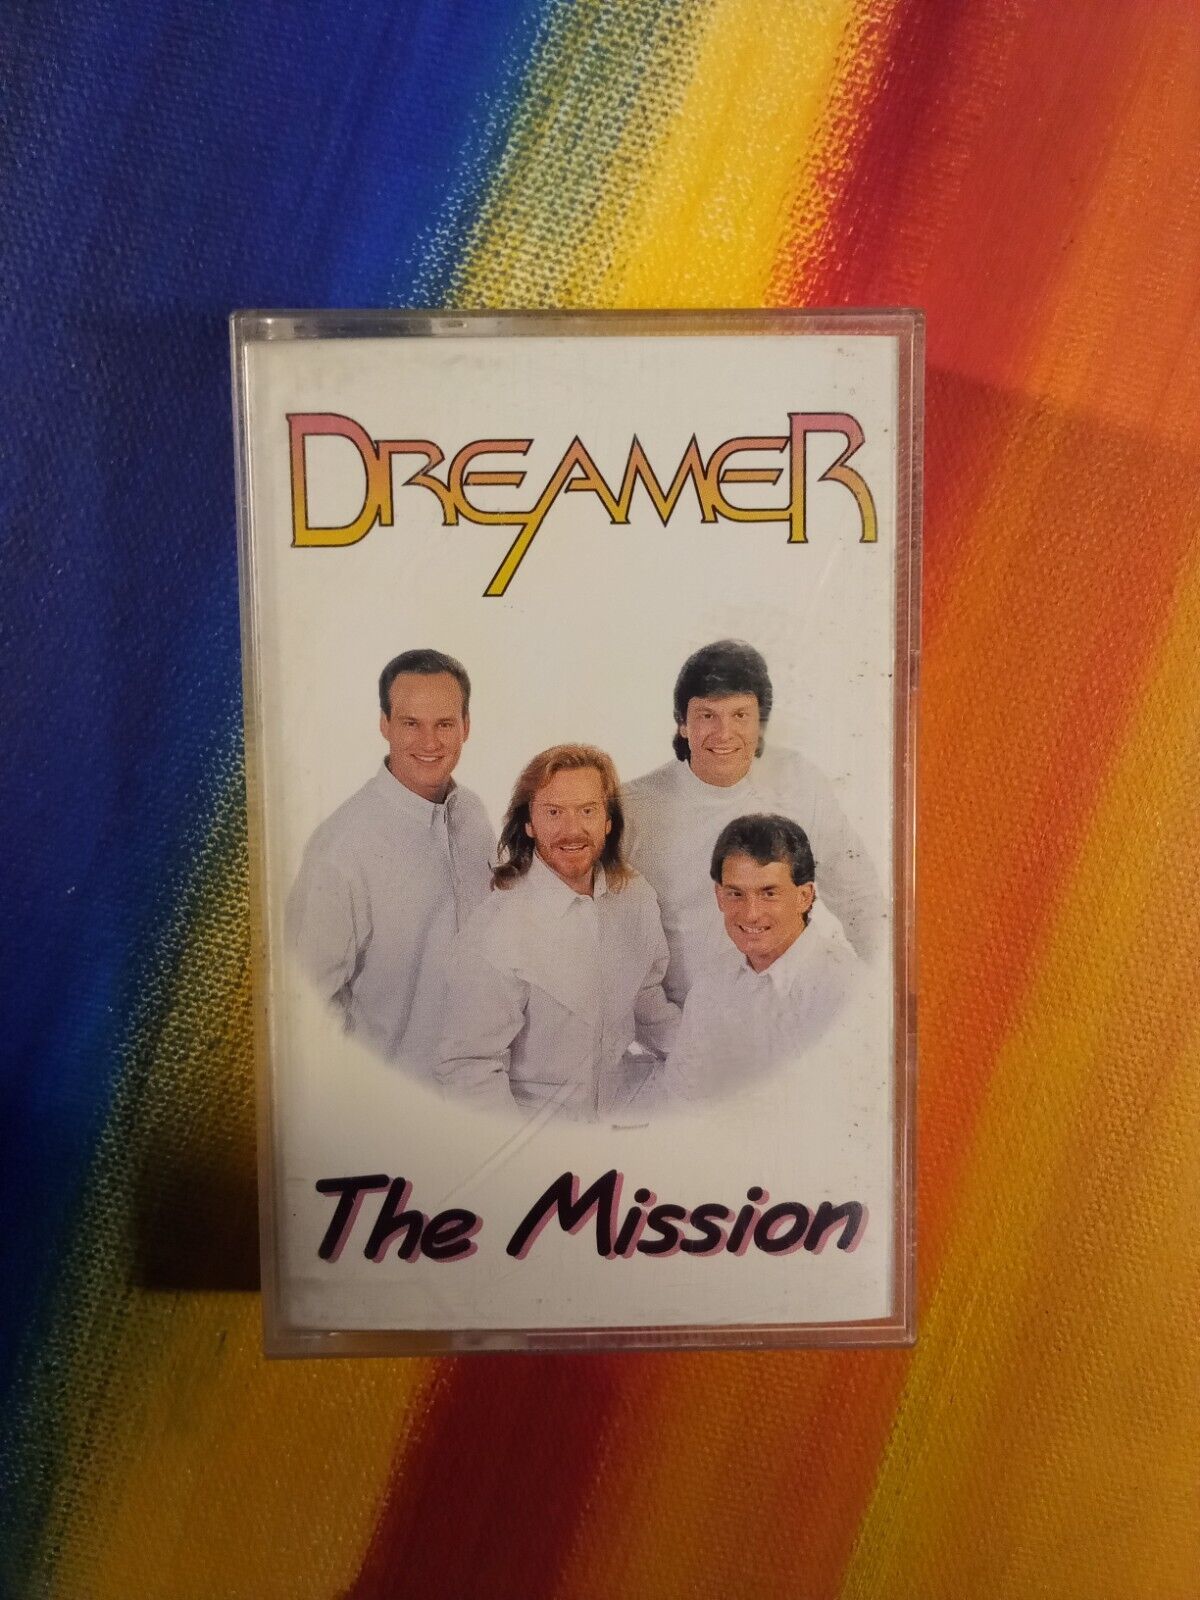 The Mission Dreamer Plano Texas Uplifting Album Cassette Tape